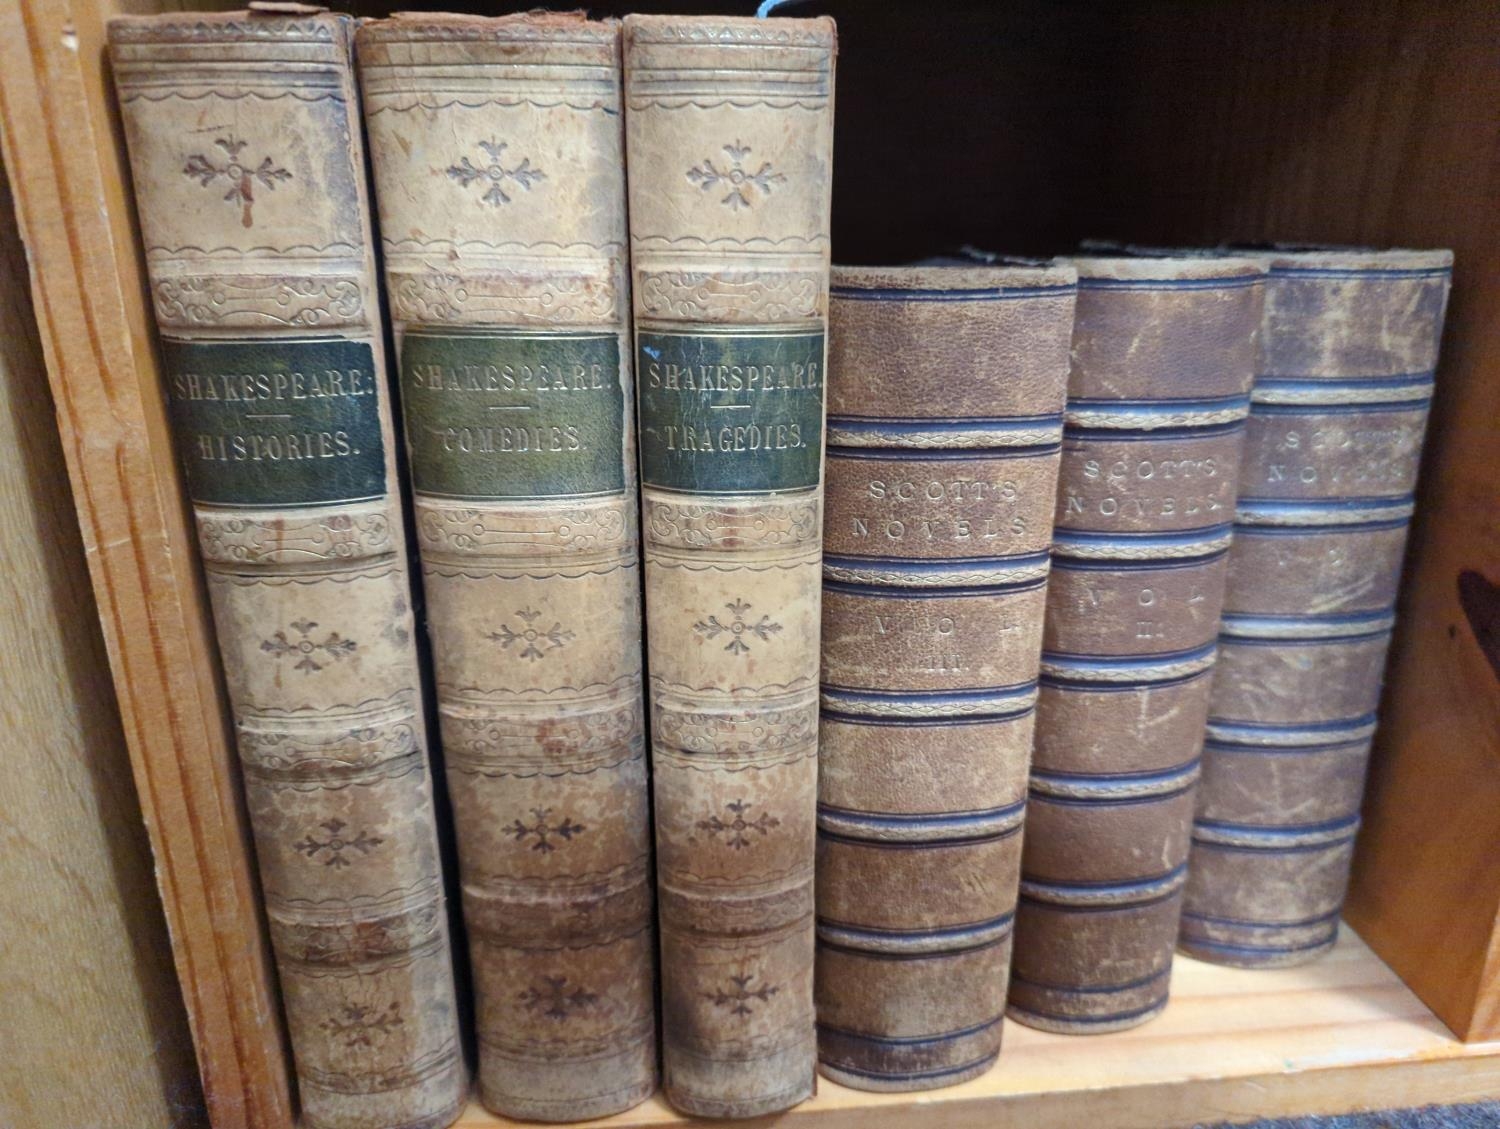 Scott's Novels Vol 1-3 1867 & Shakespeare Histories, Comedies & Tragedies. 'The London Printing & Pu